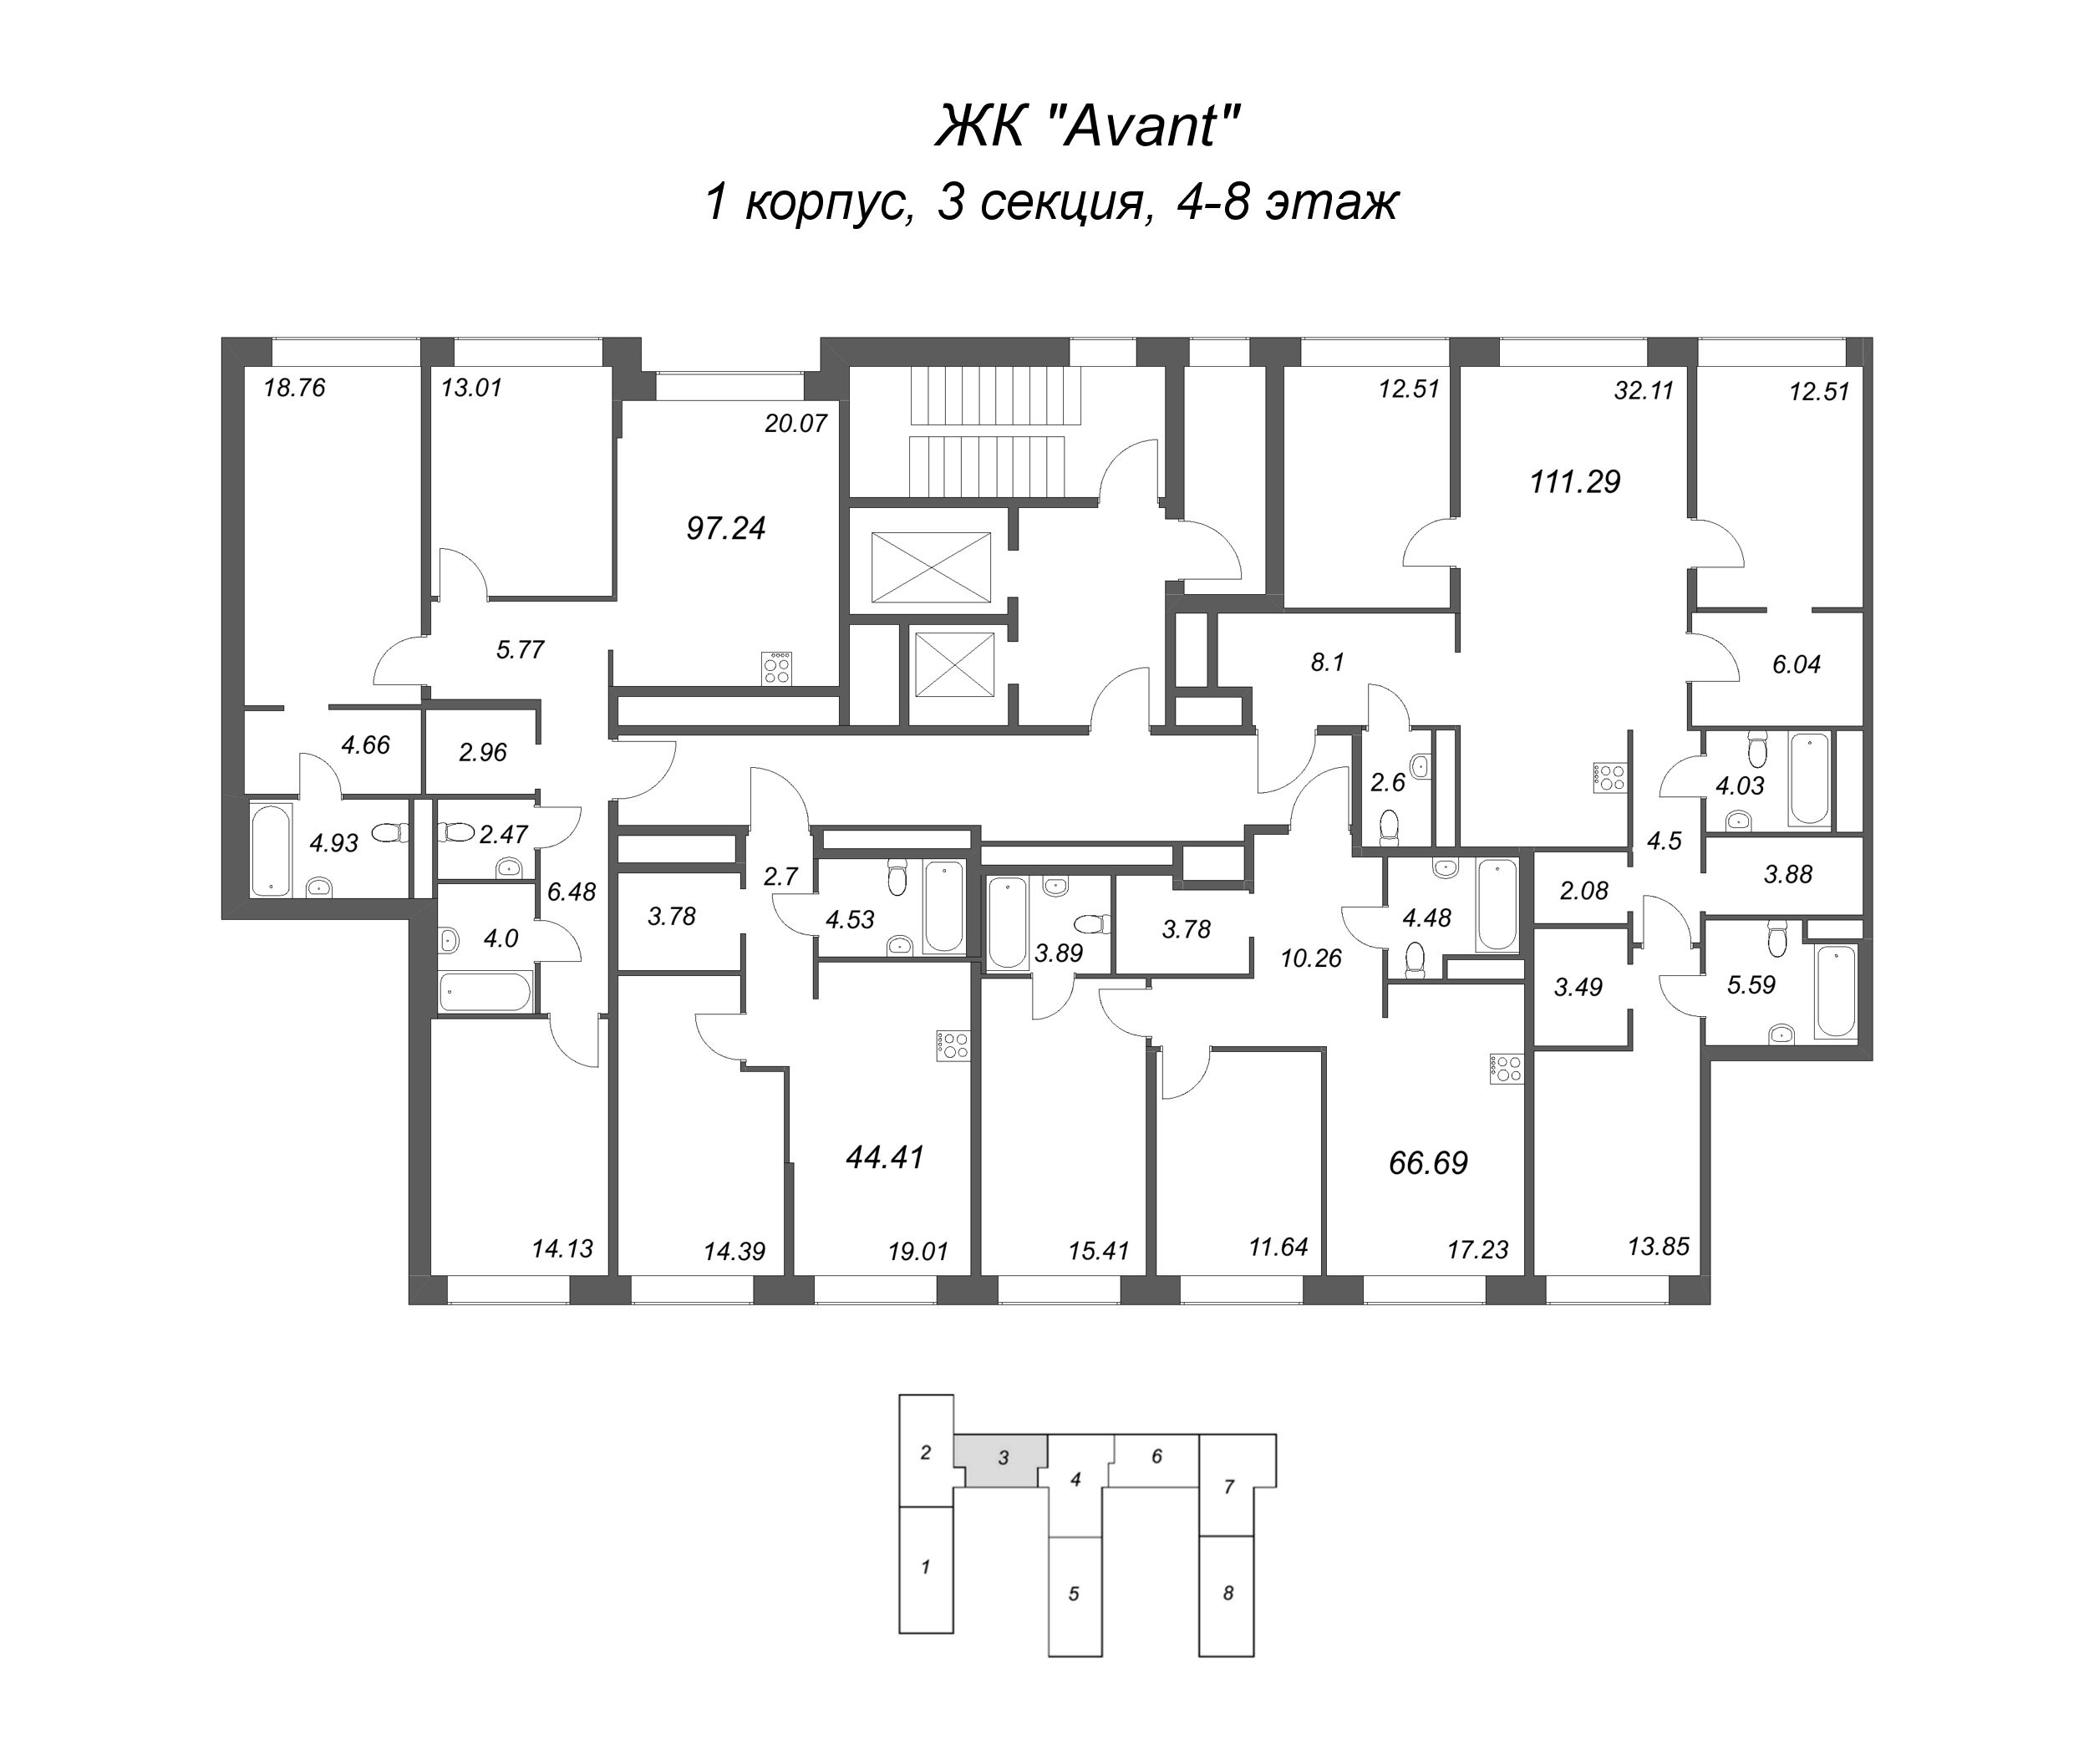 3-комнатная (Евро) квартира, 66.69 м² - планировка этажа